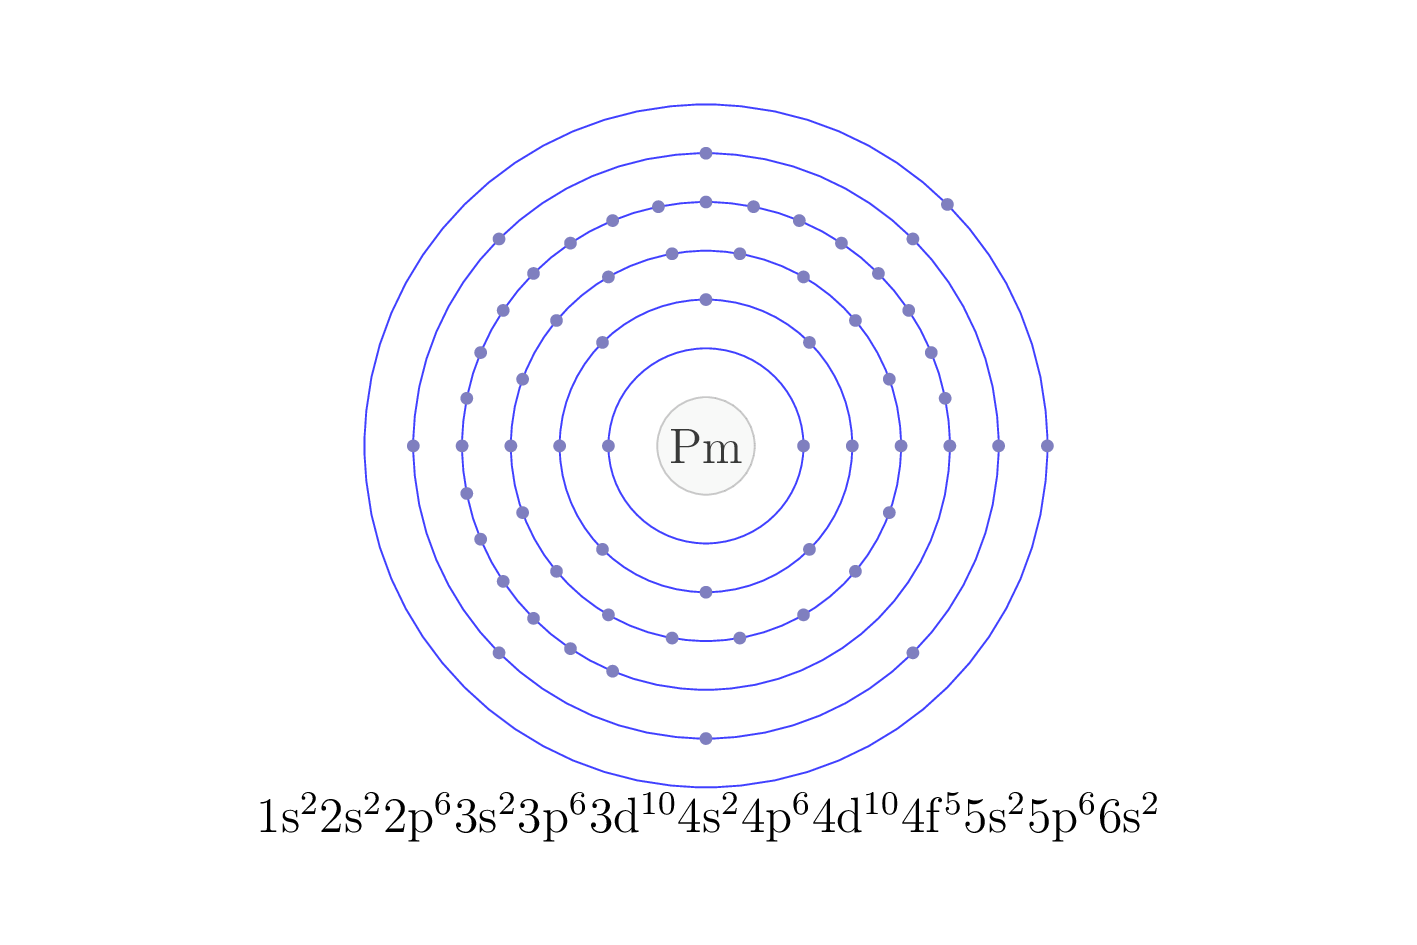 electron configuration of element Pm